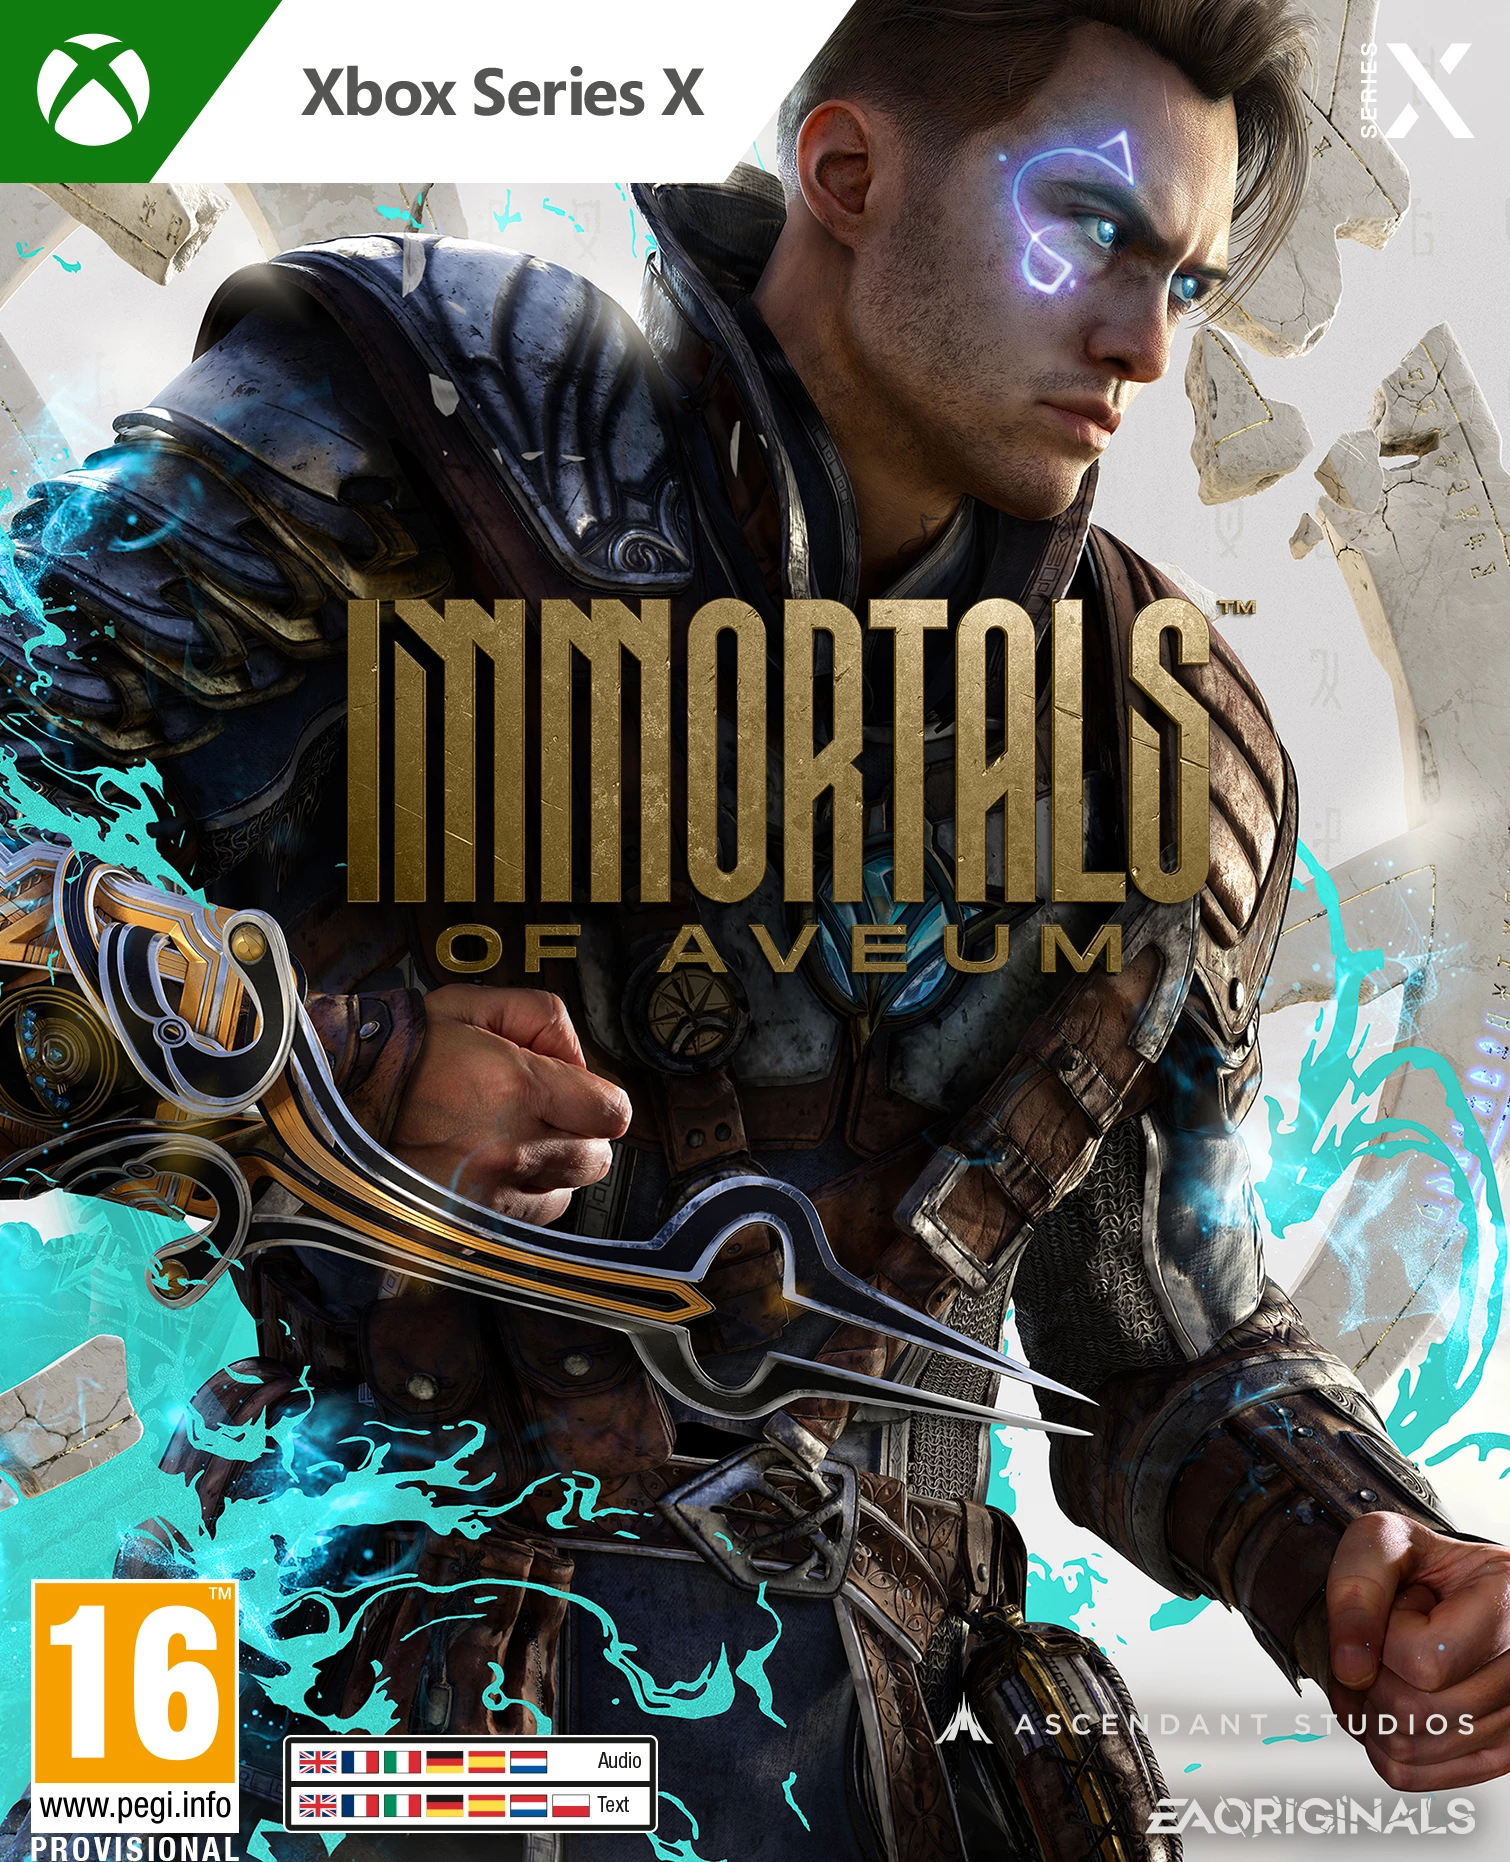 Immortals of Aveum (Xbox Series X), Ascendant Studios, Electronic Arts